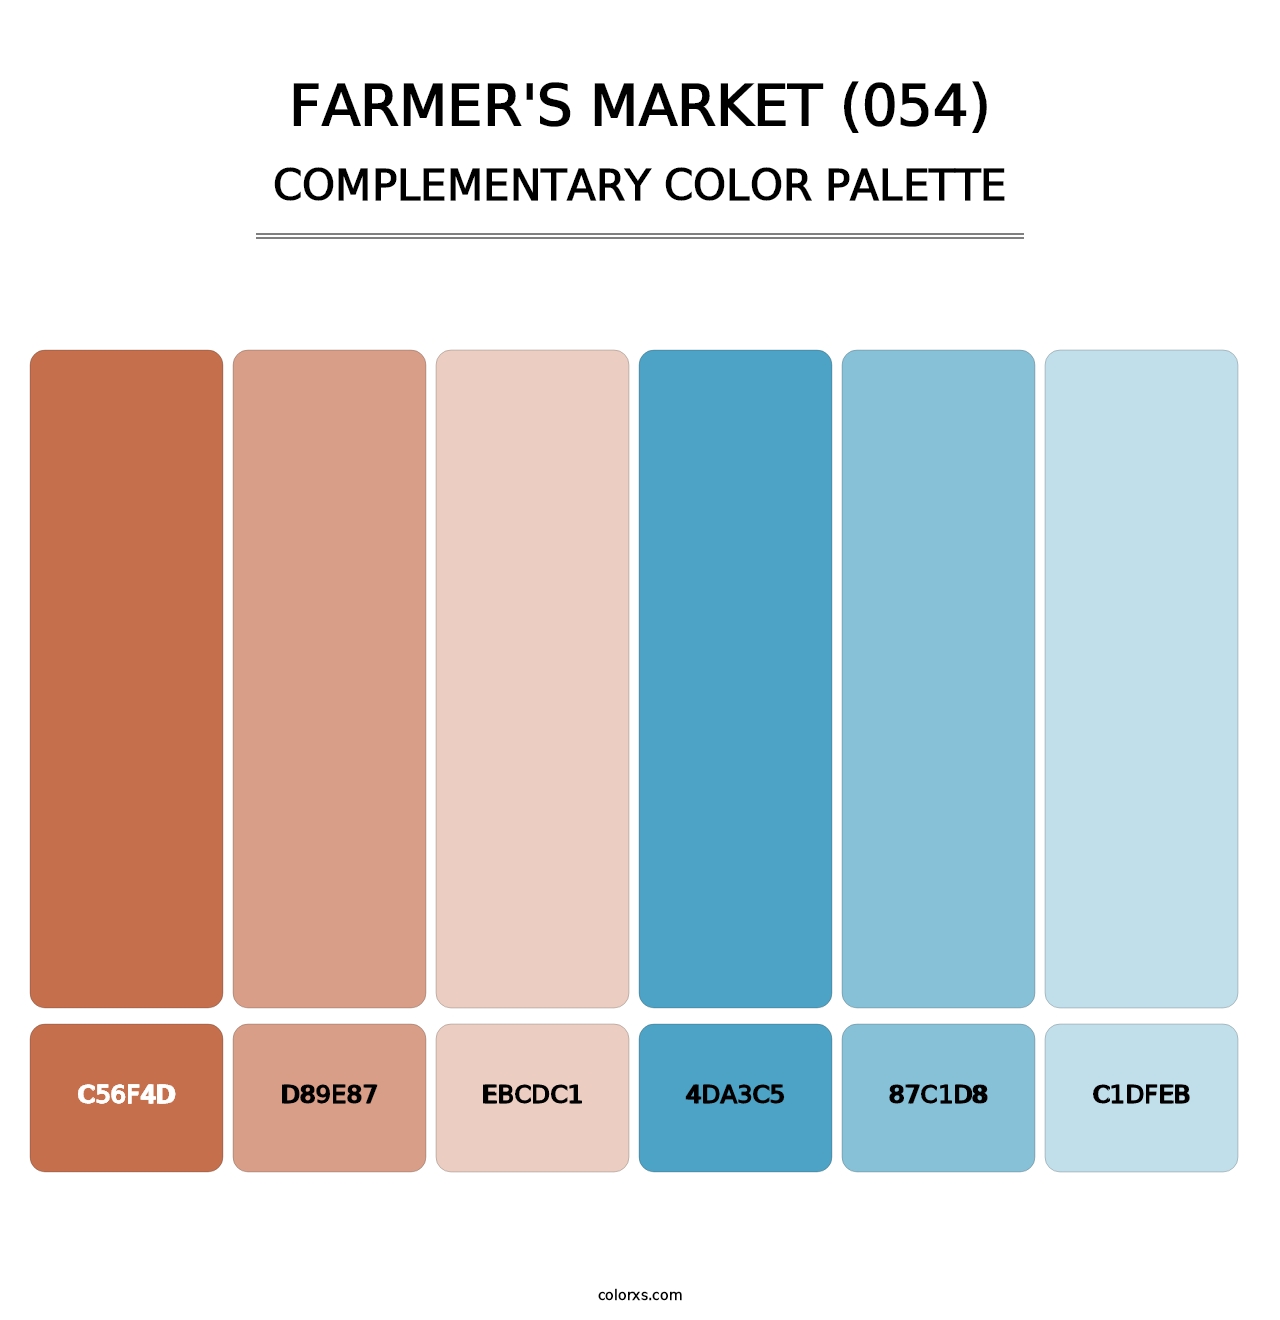 Farmer's Market (054) - Complementary Color Palette